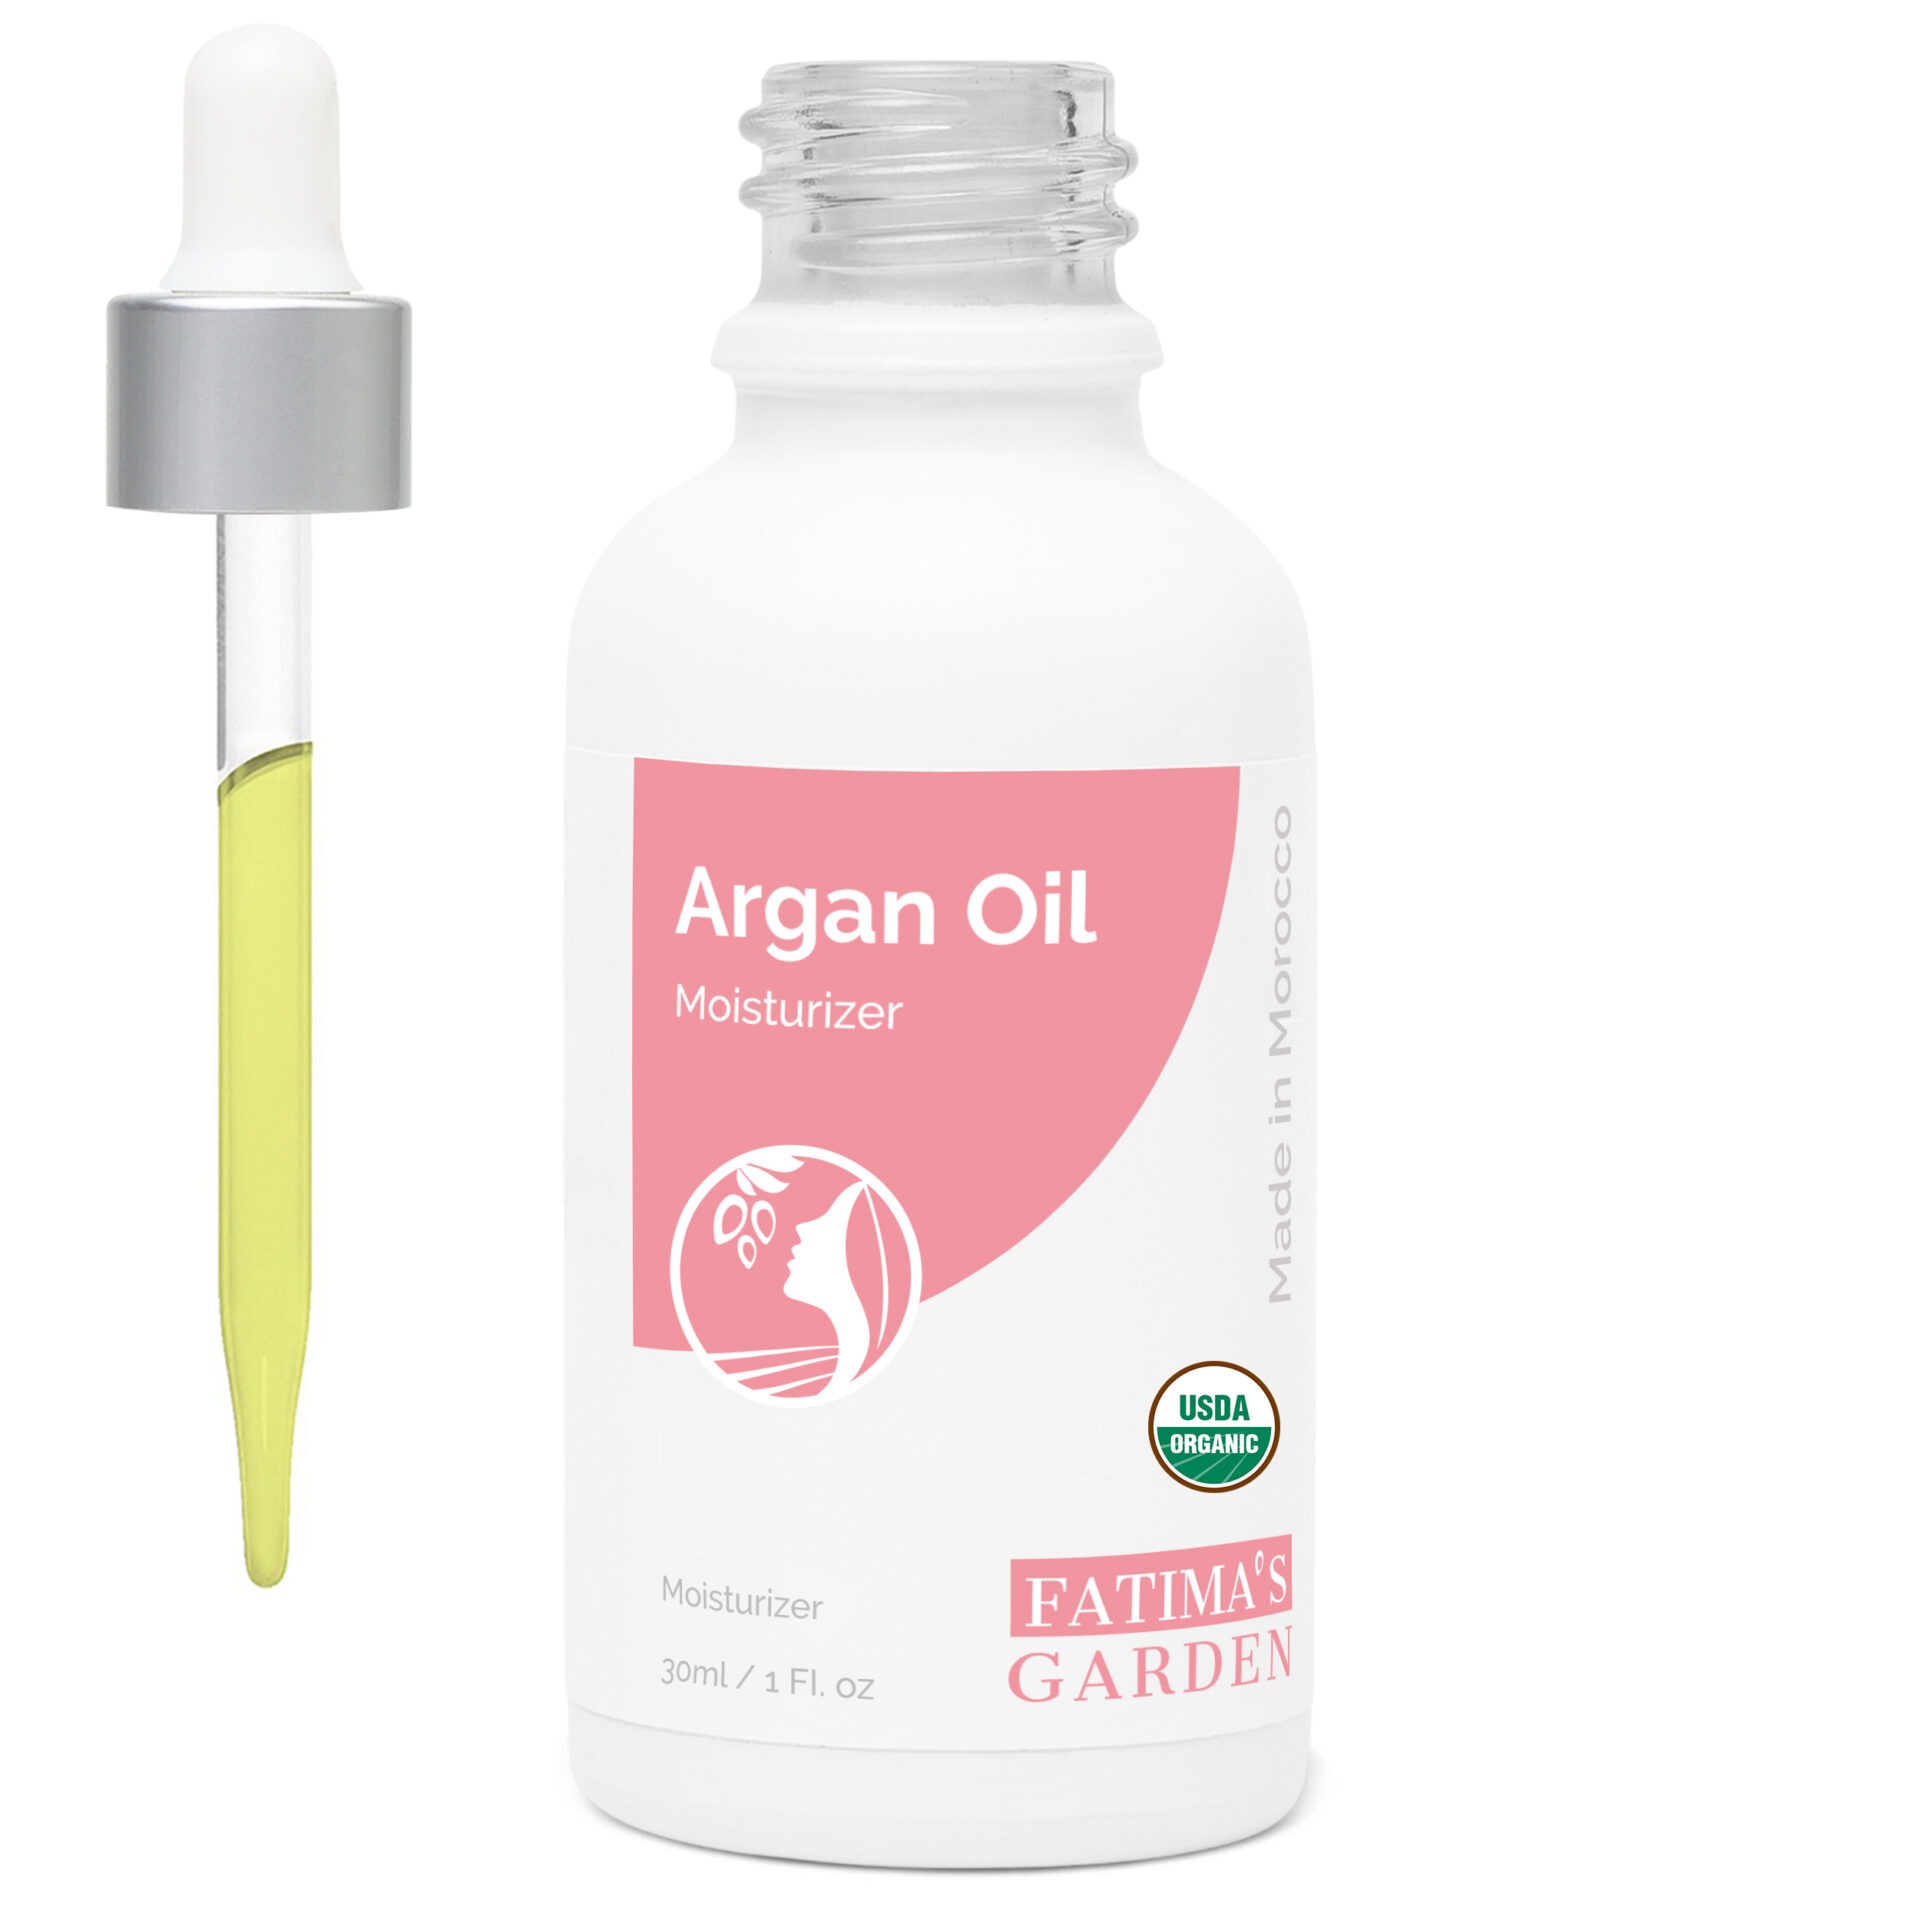 argan oil by fatima's garden 30ml